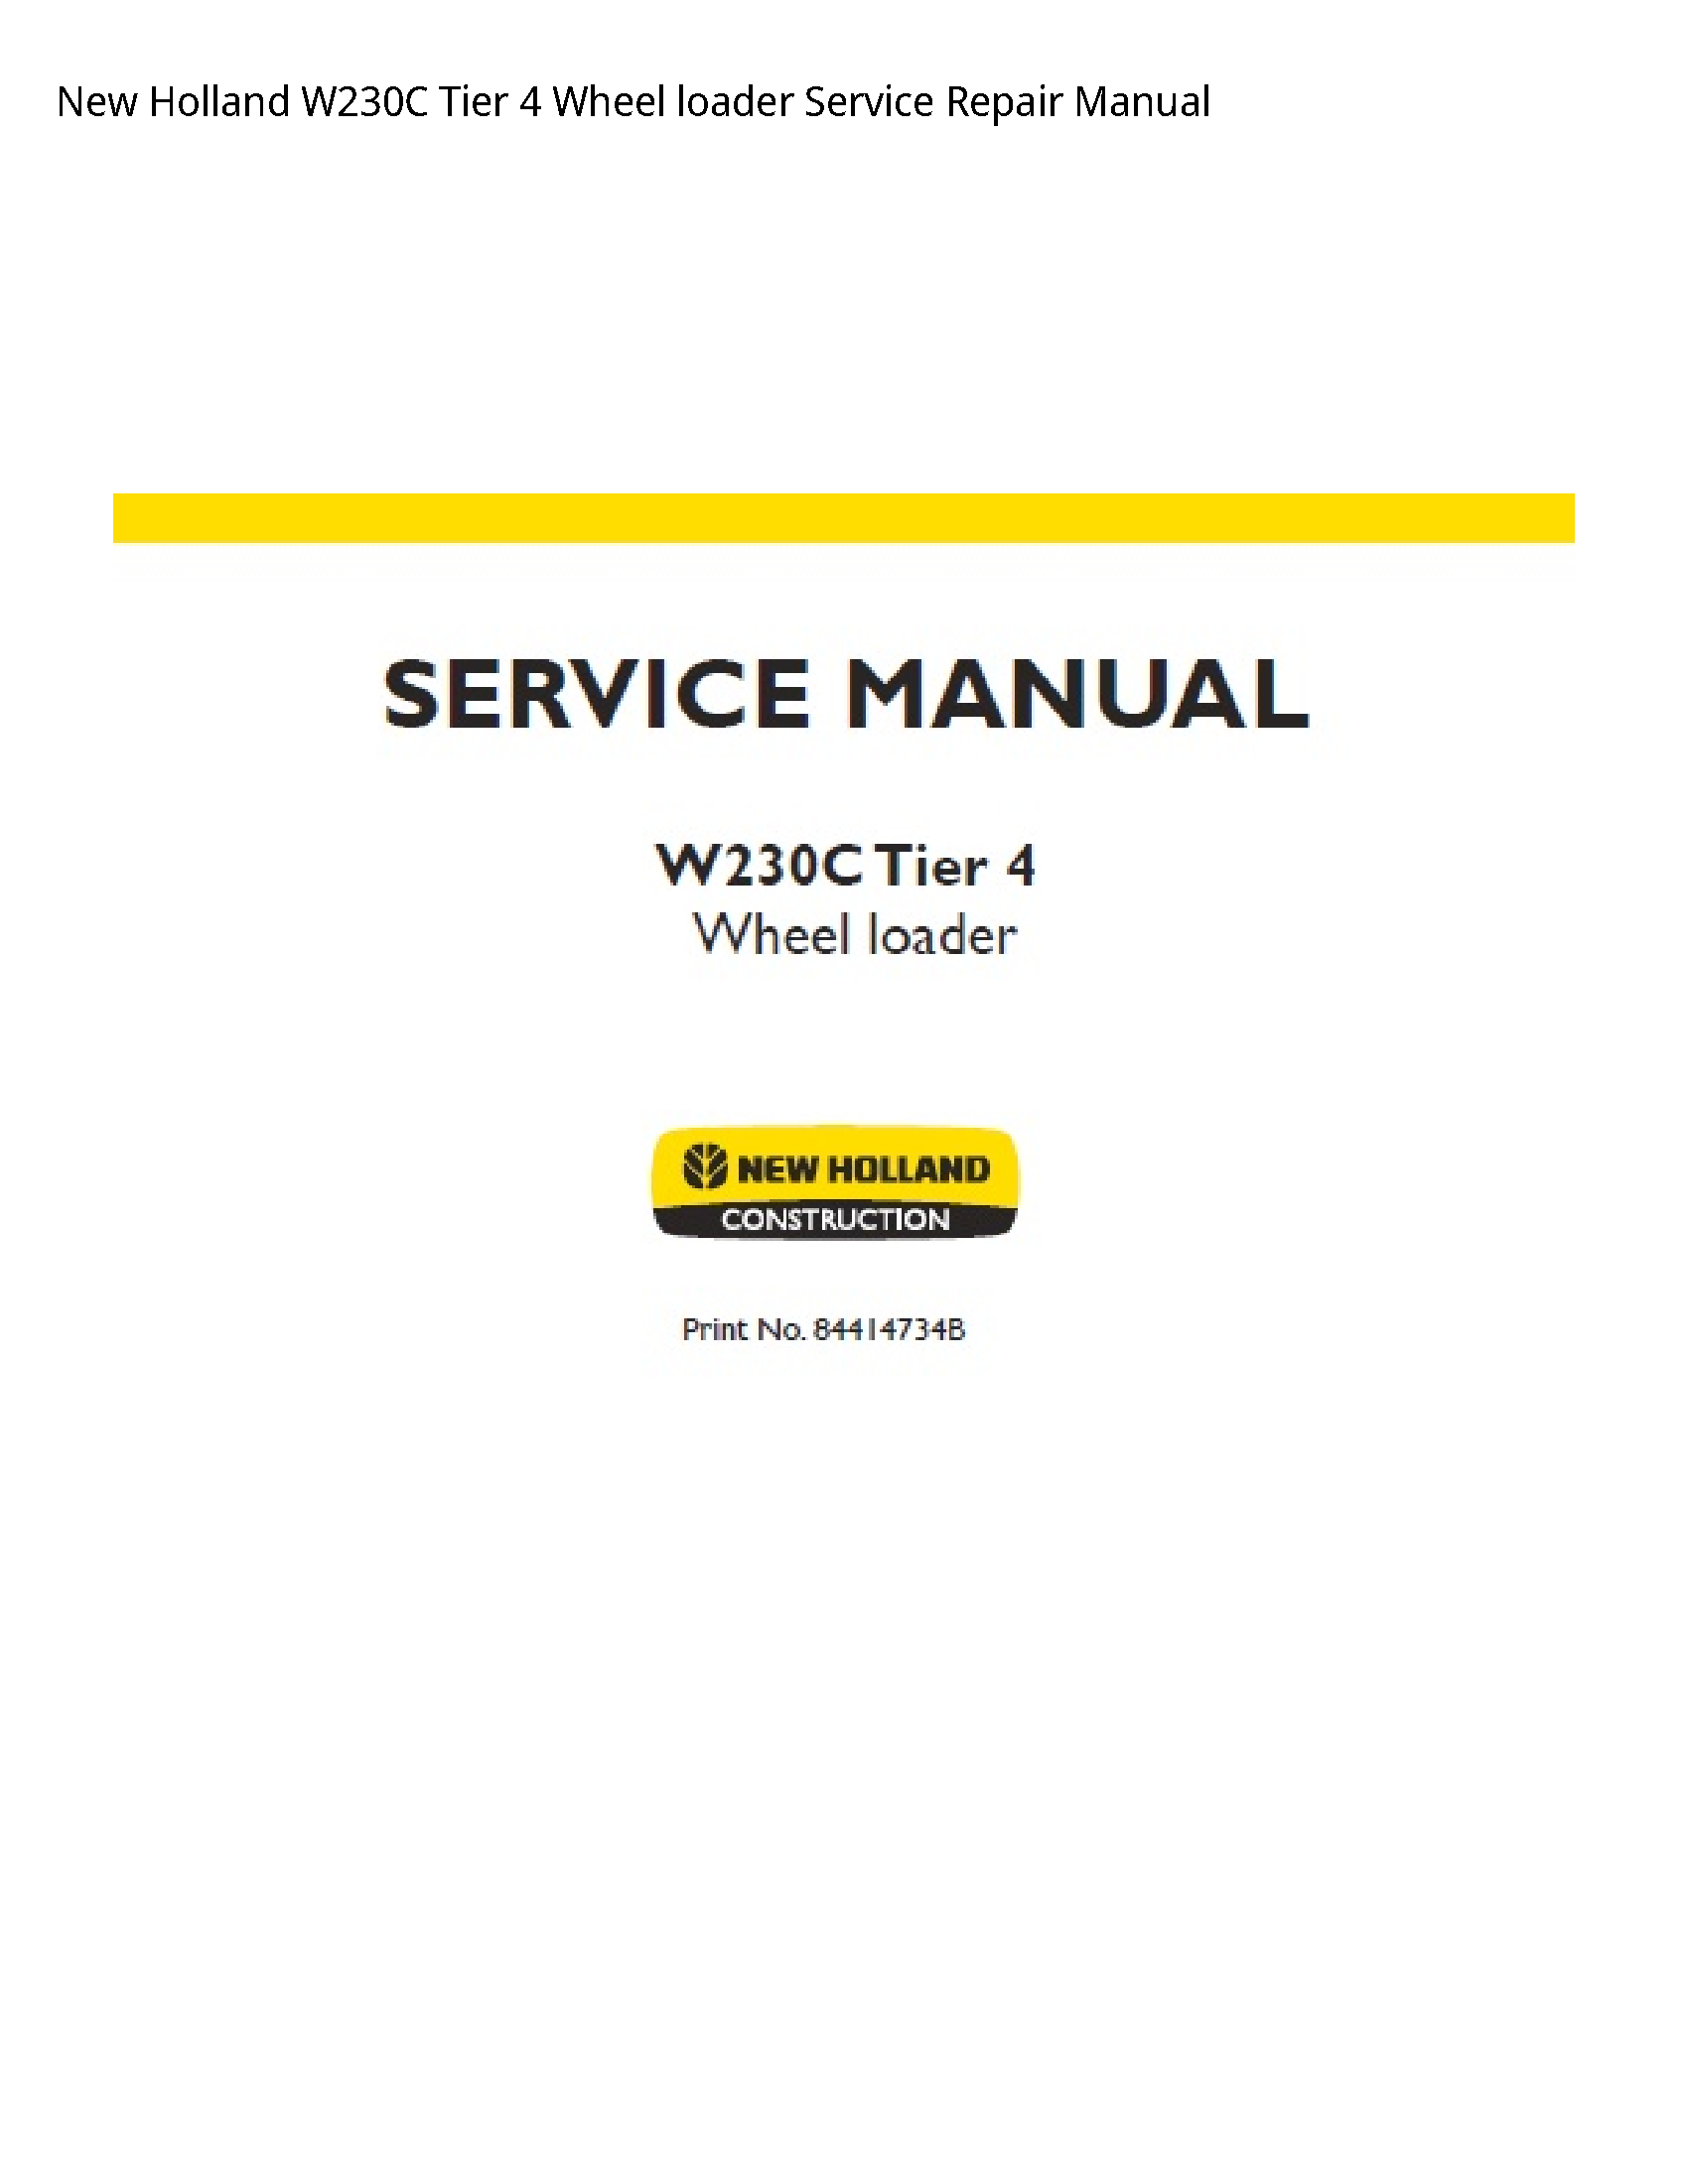 New Holland W230C Tier Wheel loader manual